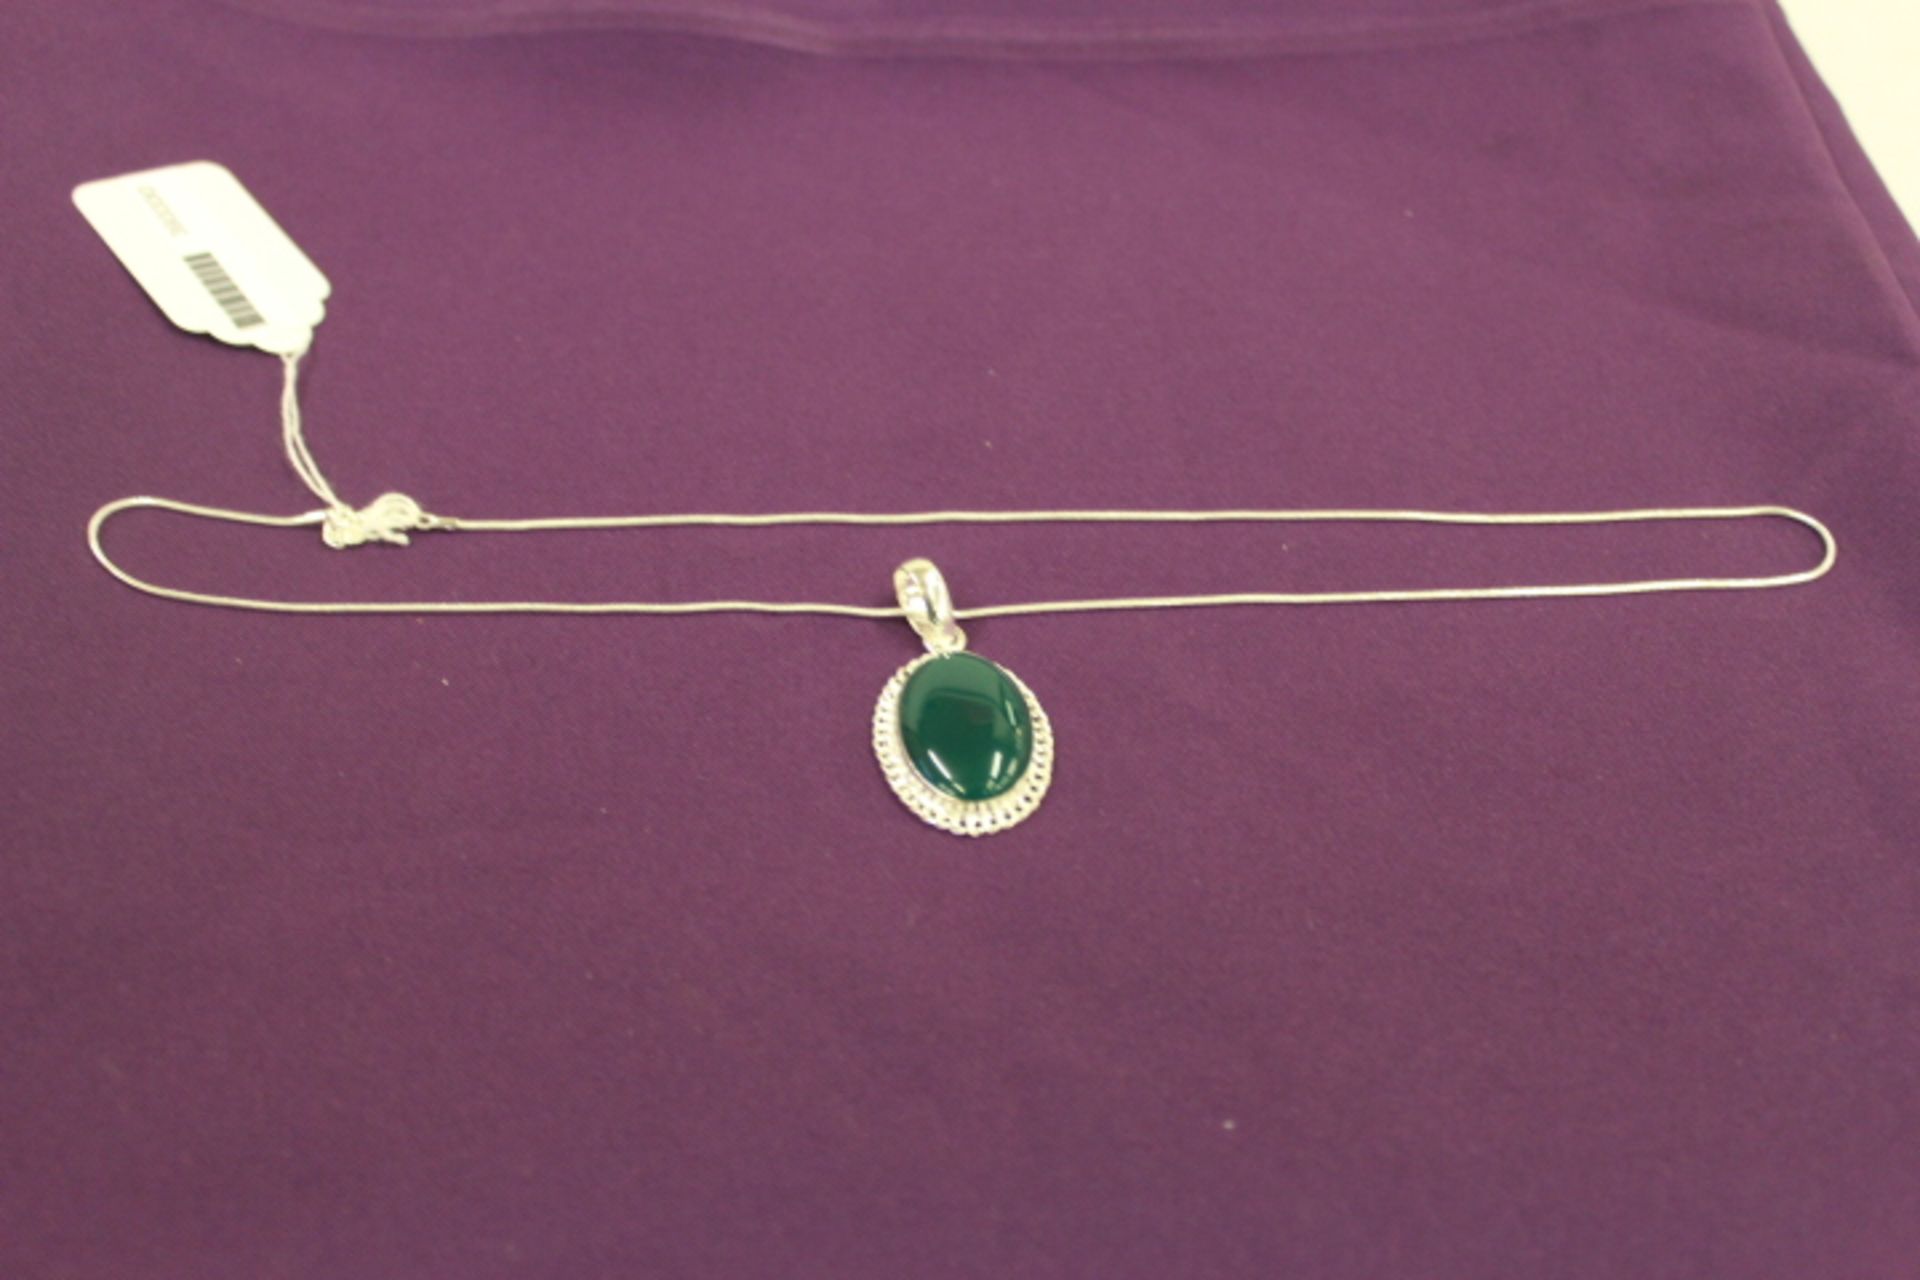 WM Neck Chain With Green Stone Pendant